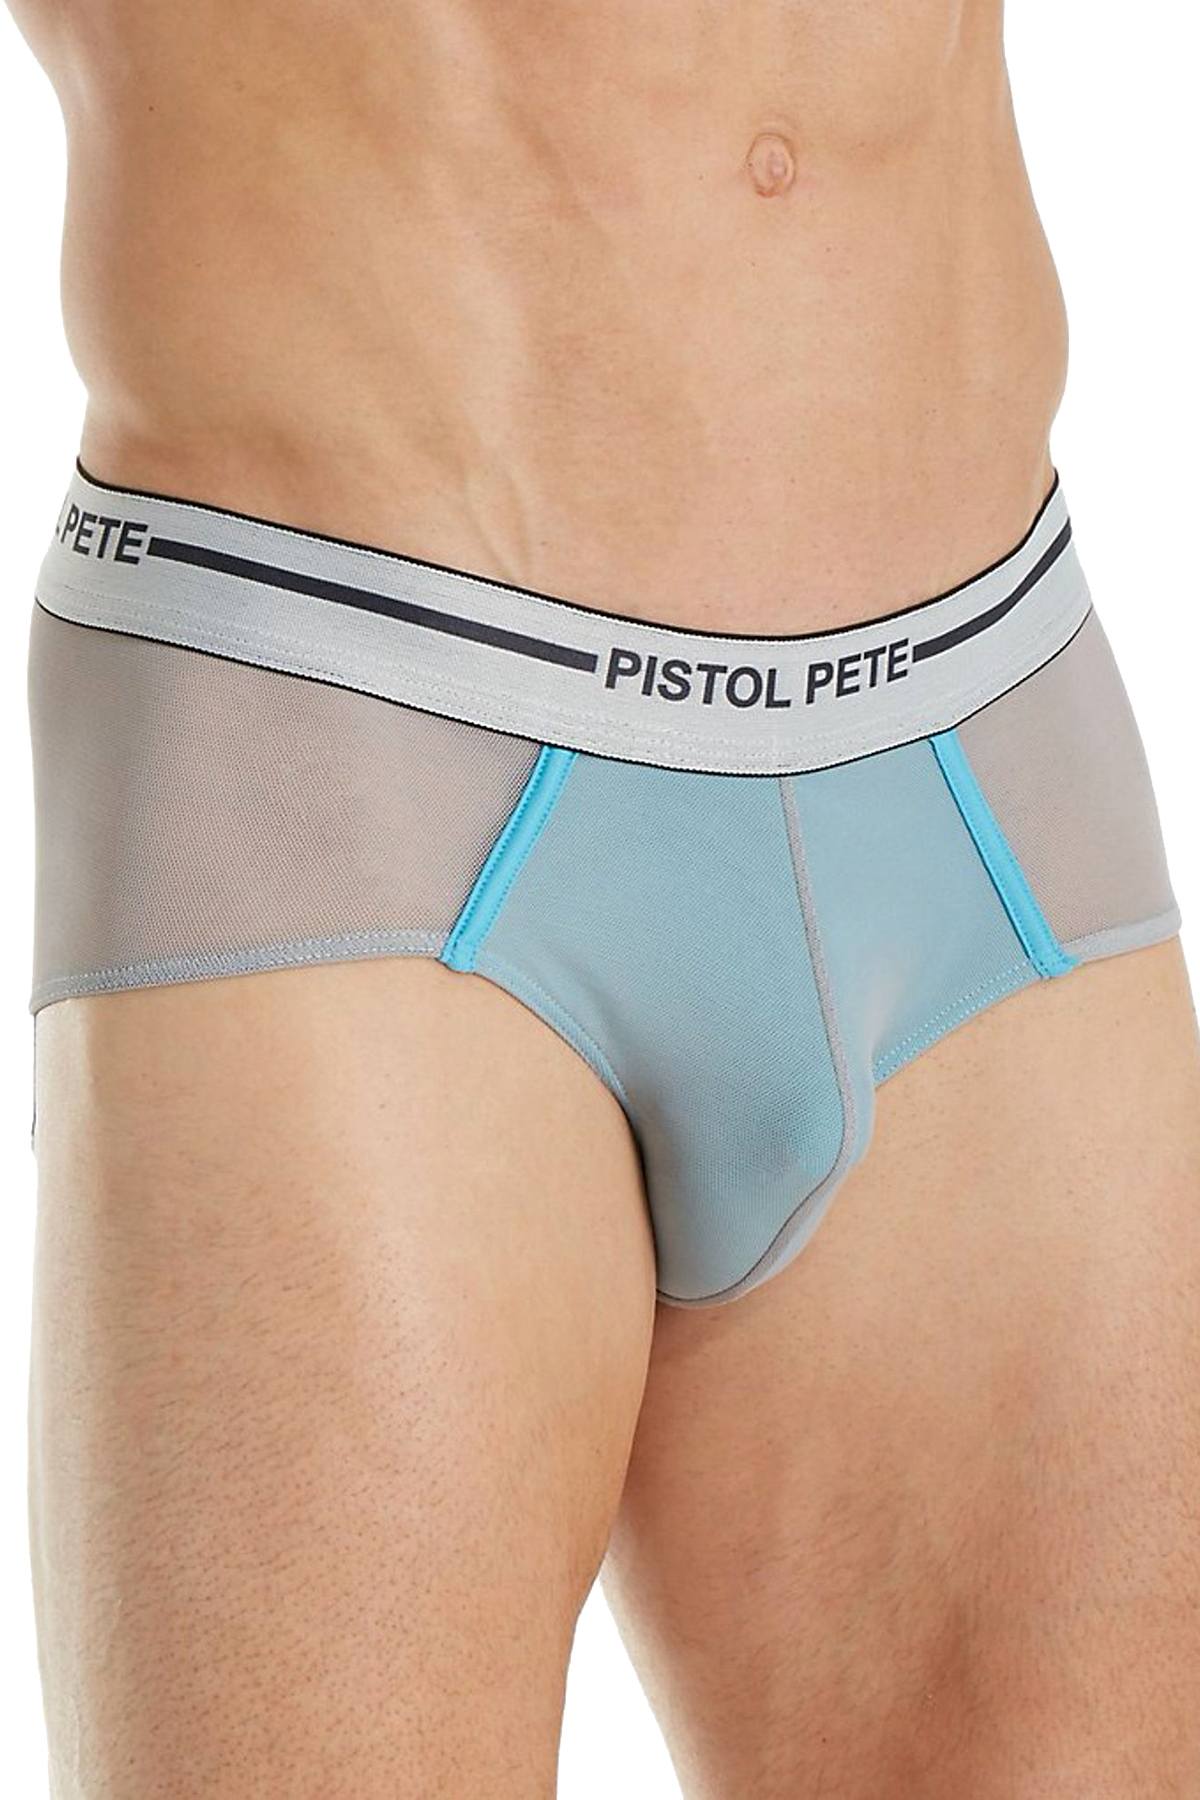 Pistol Pete Grey/Turquoise Mesh Bikini Brief